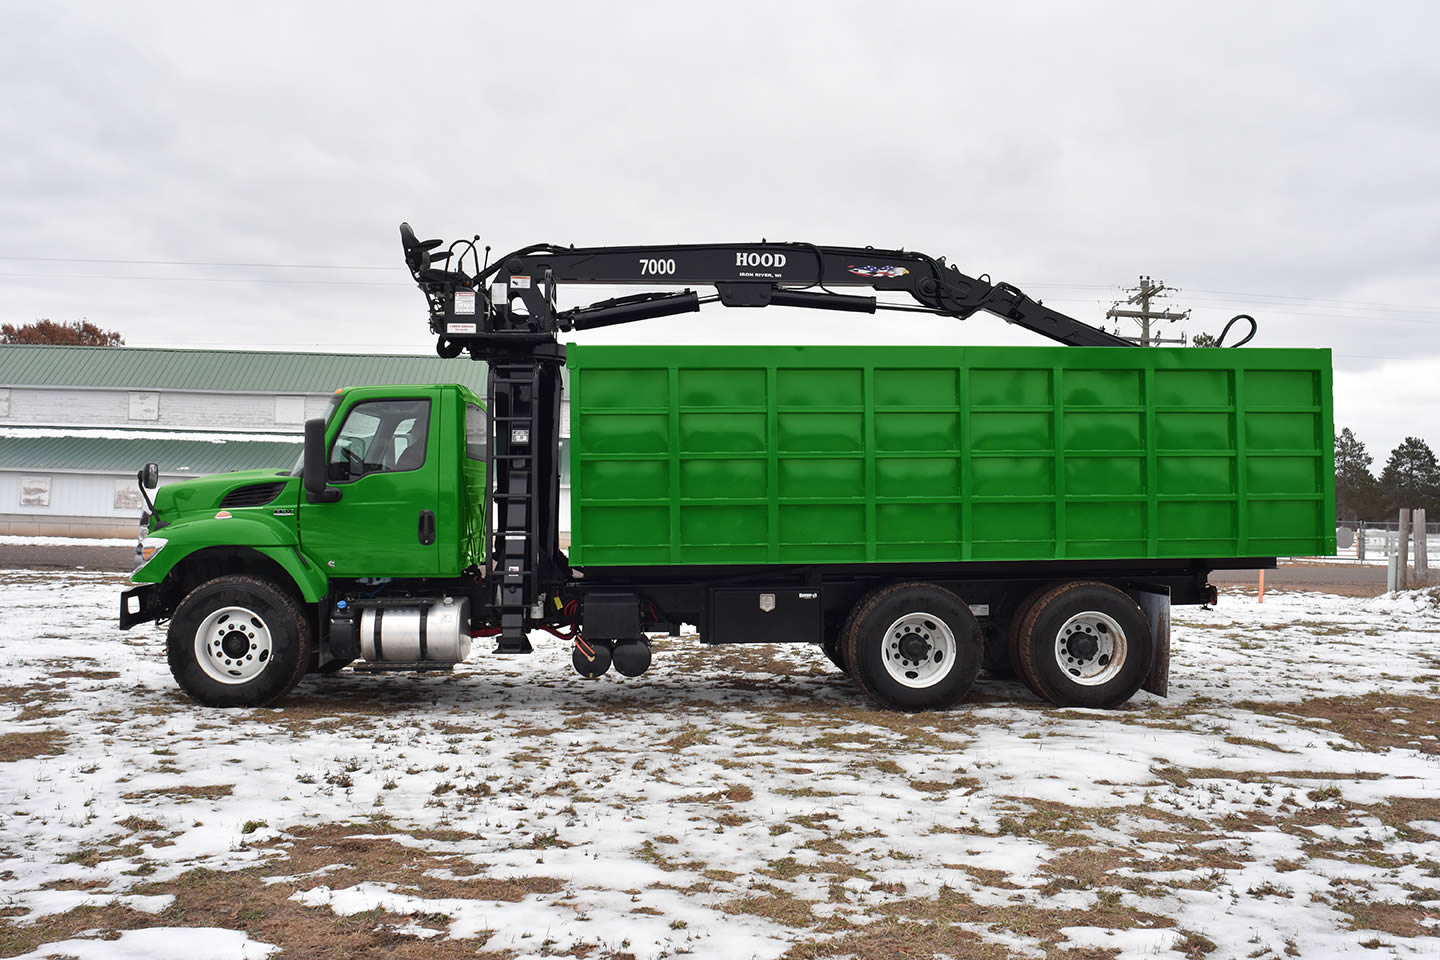 hood-loaders-truck-bed-side-view-green